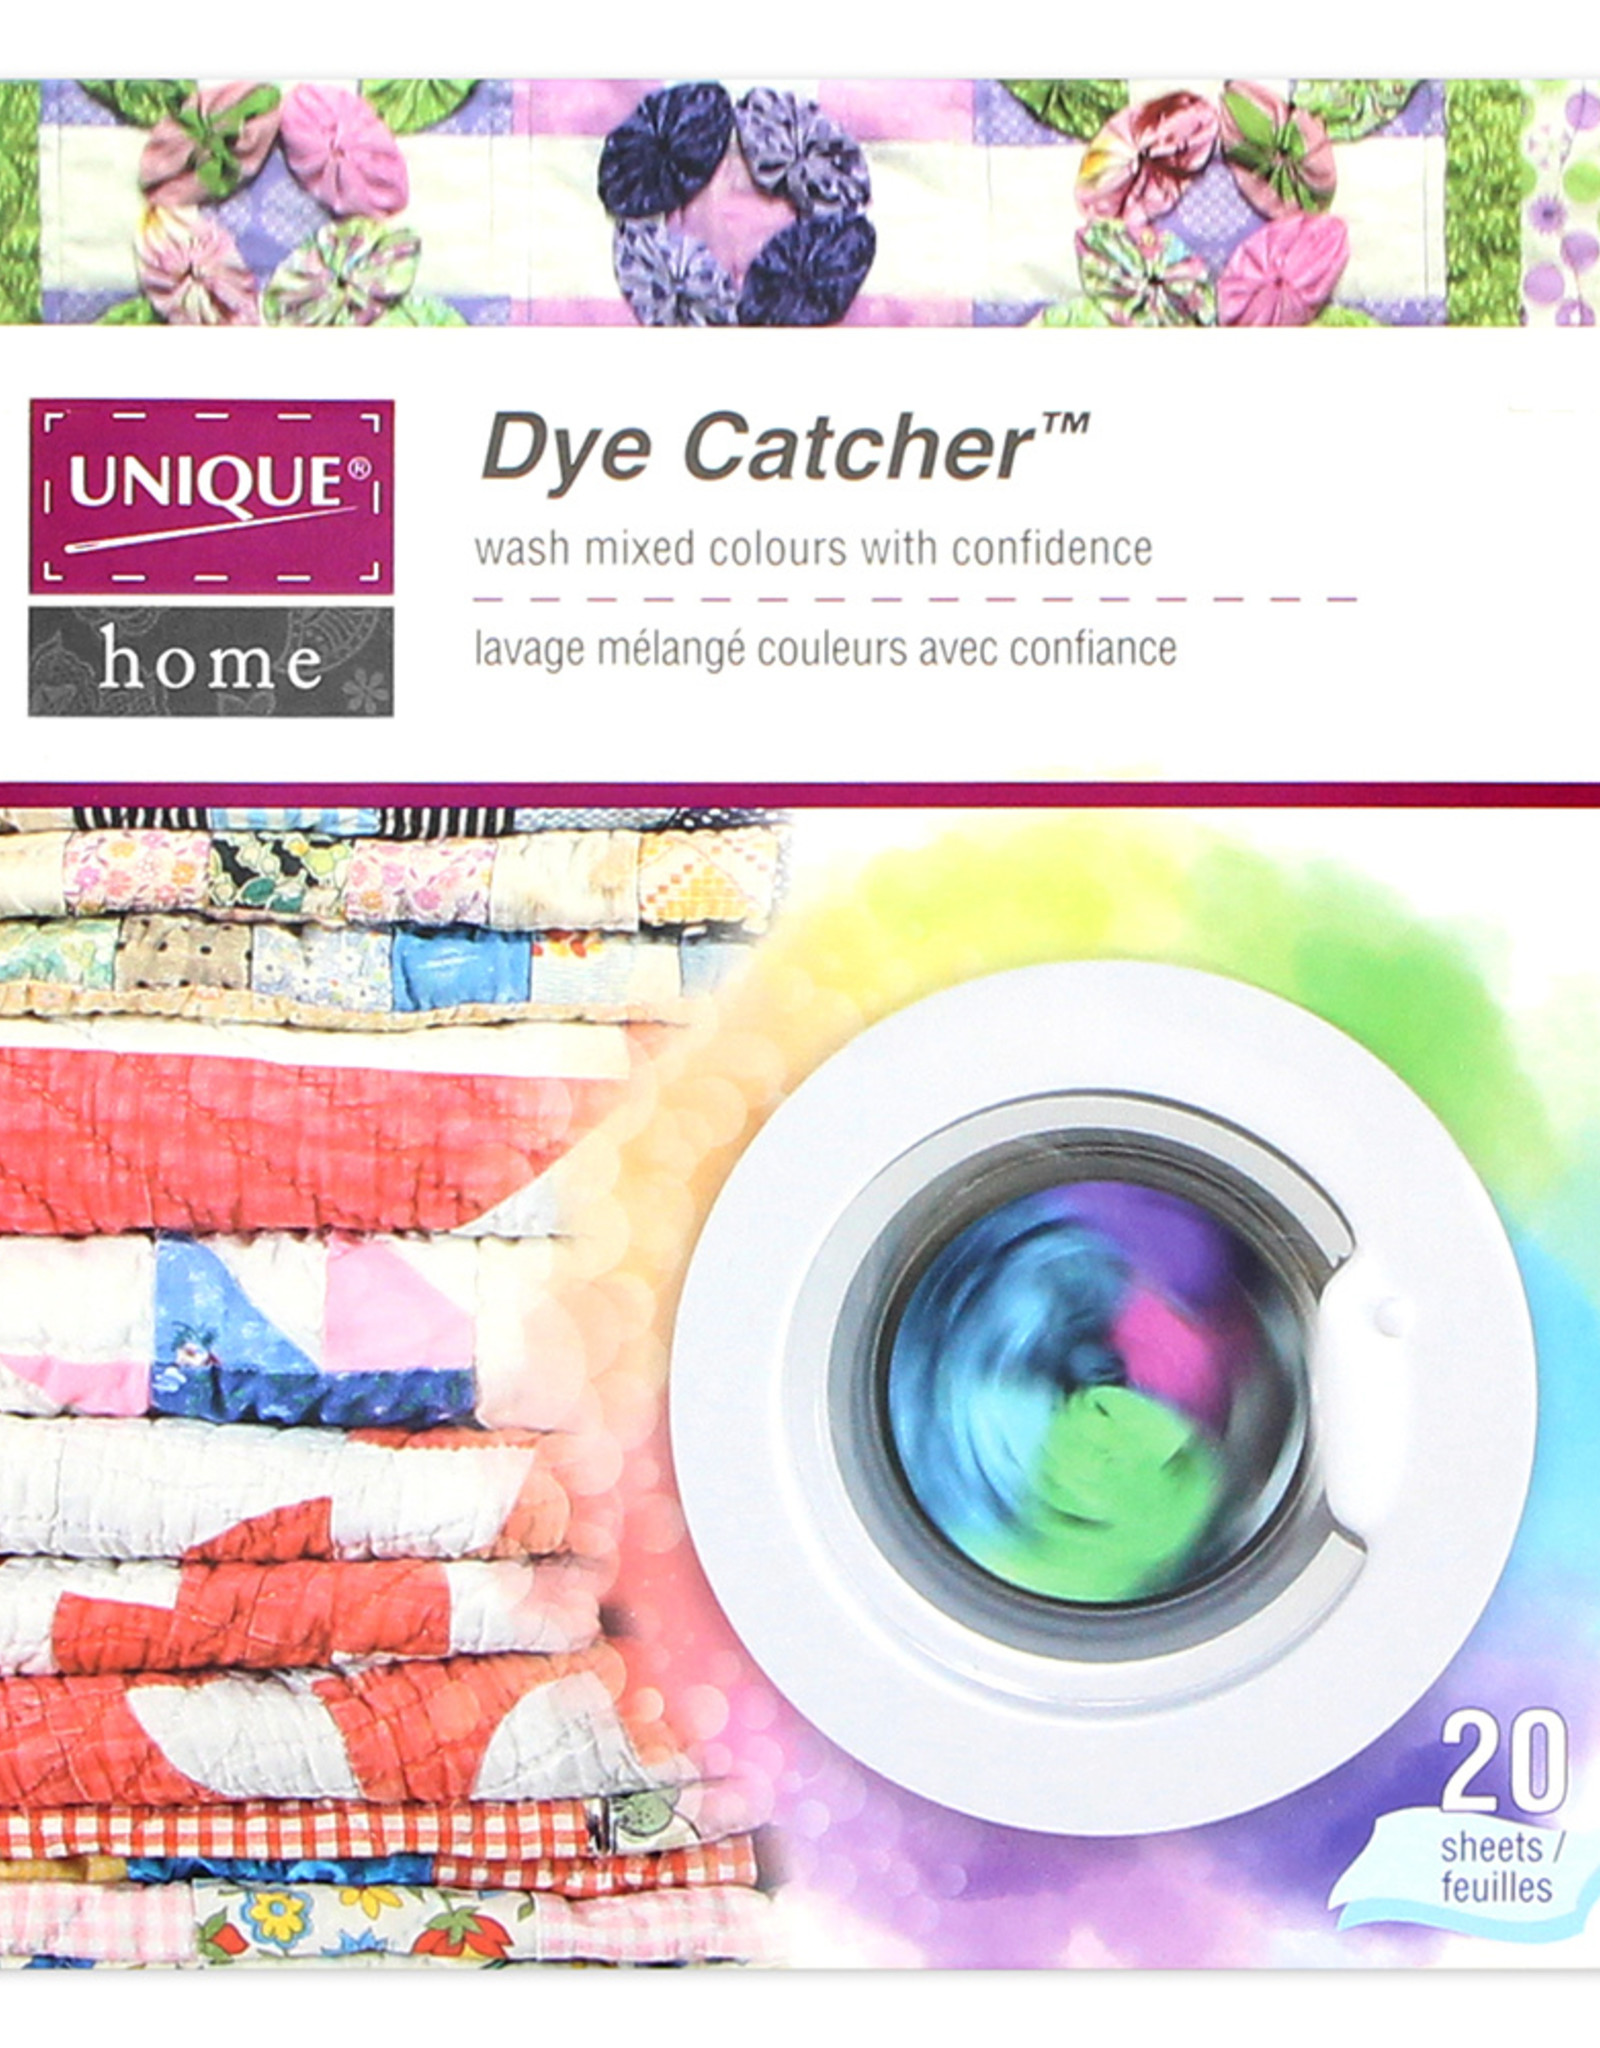 Dye Catcher